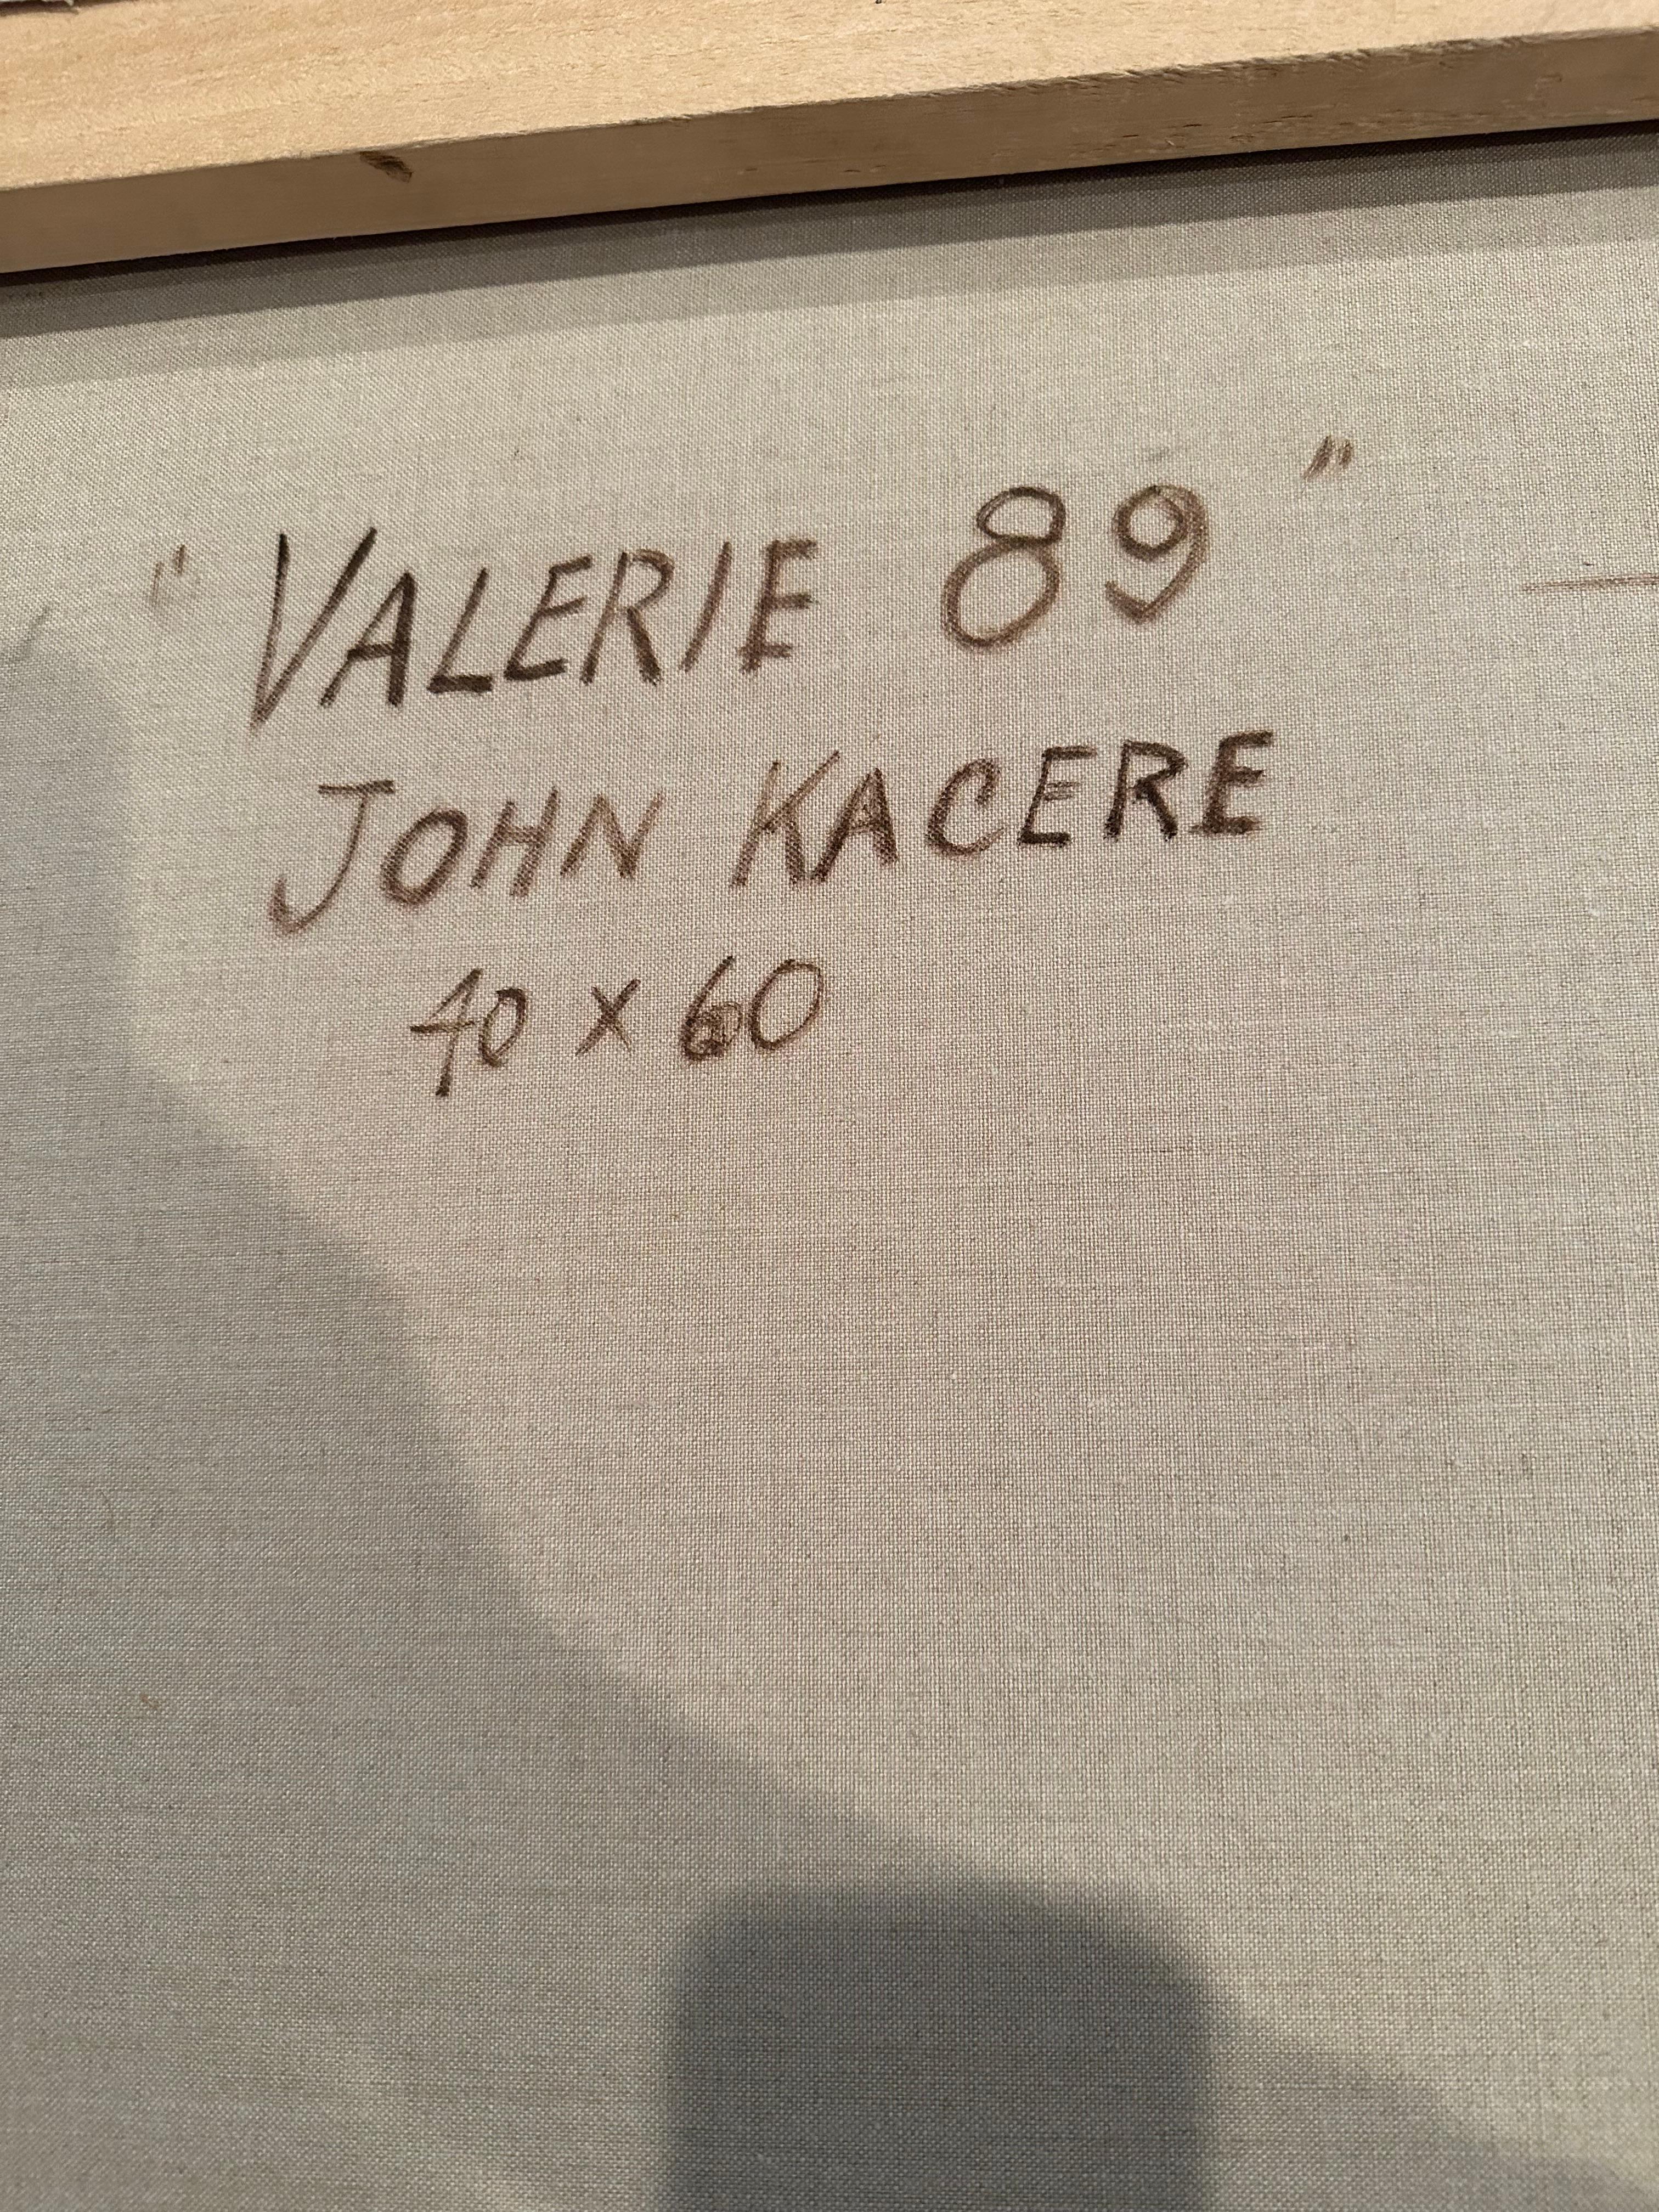 Valerie - Painting by John Kacere